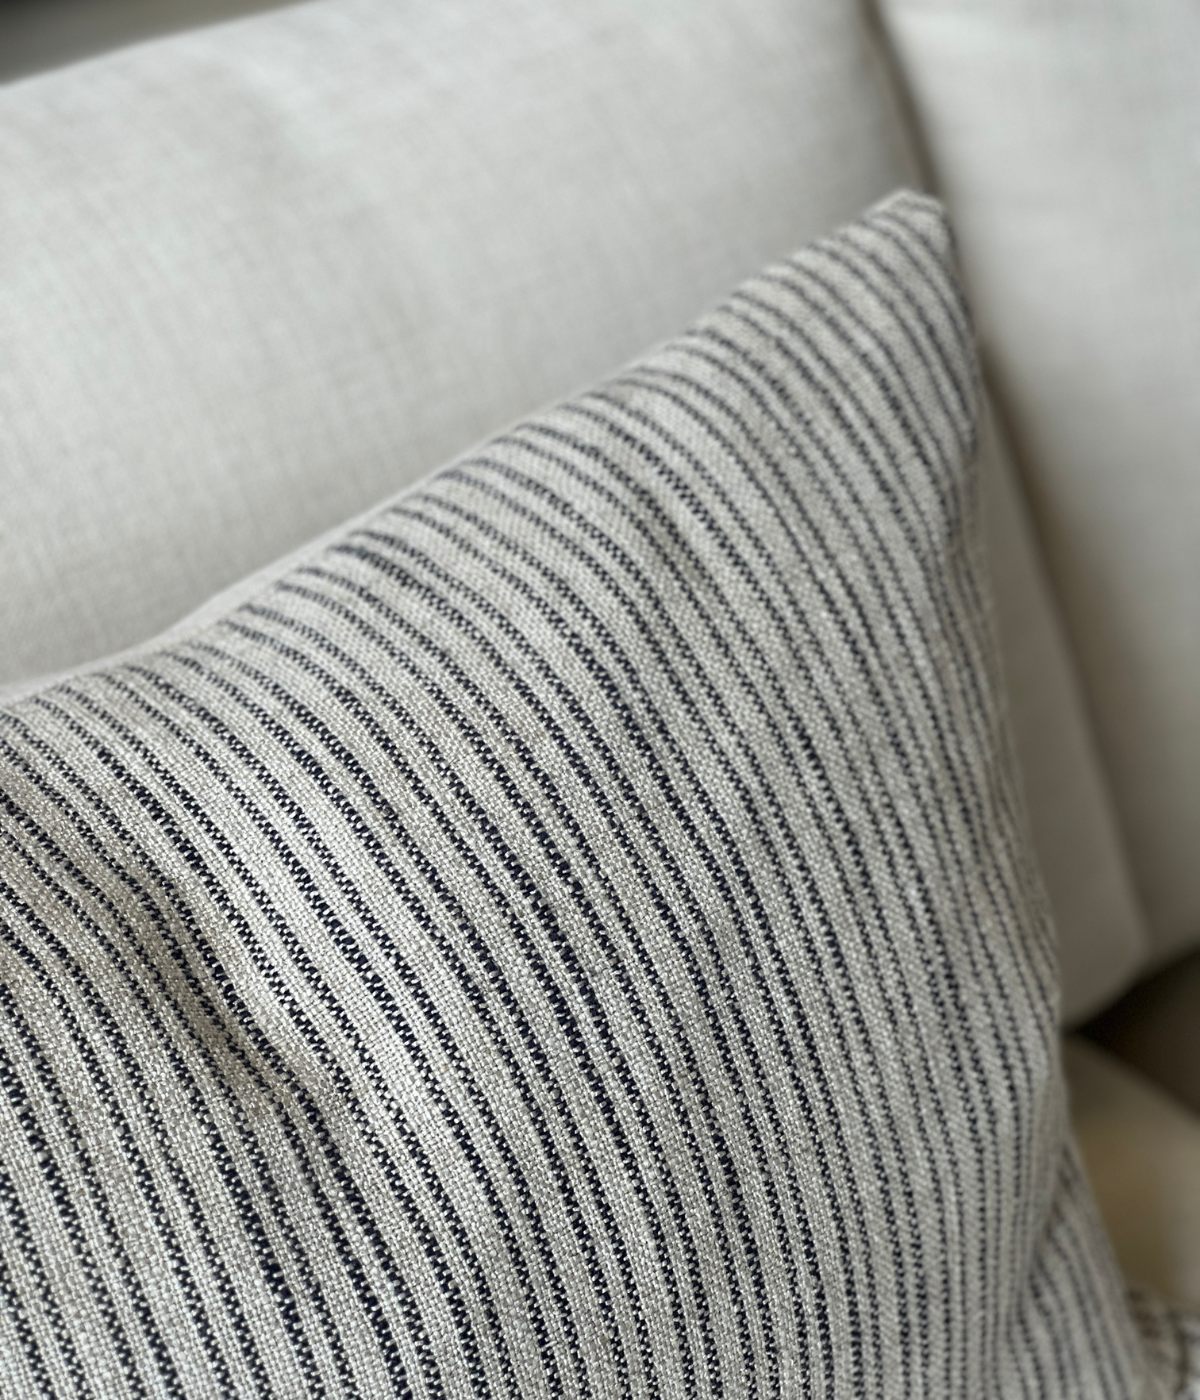 Country Stripe Linen Pillow